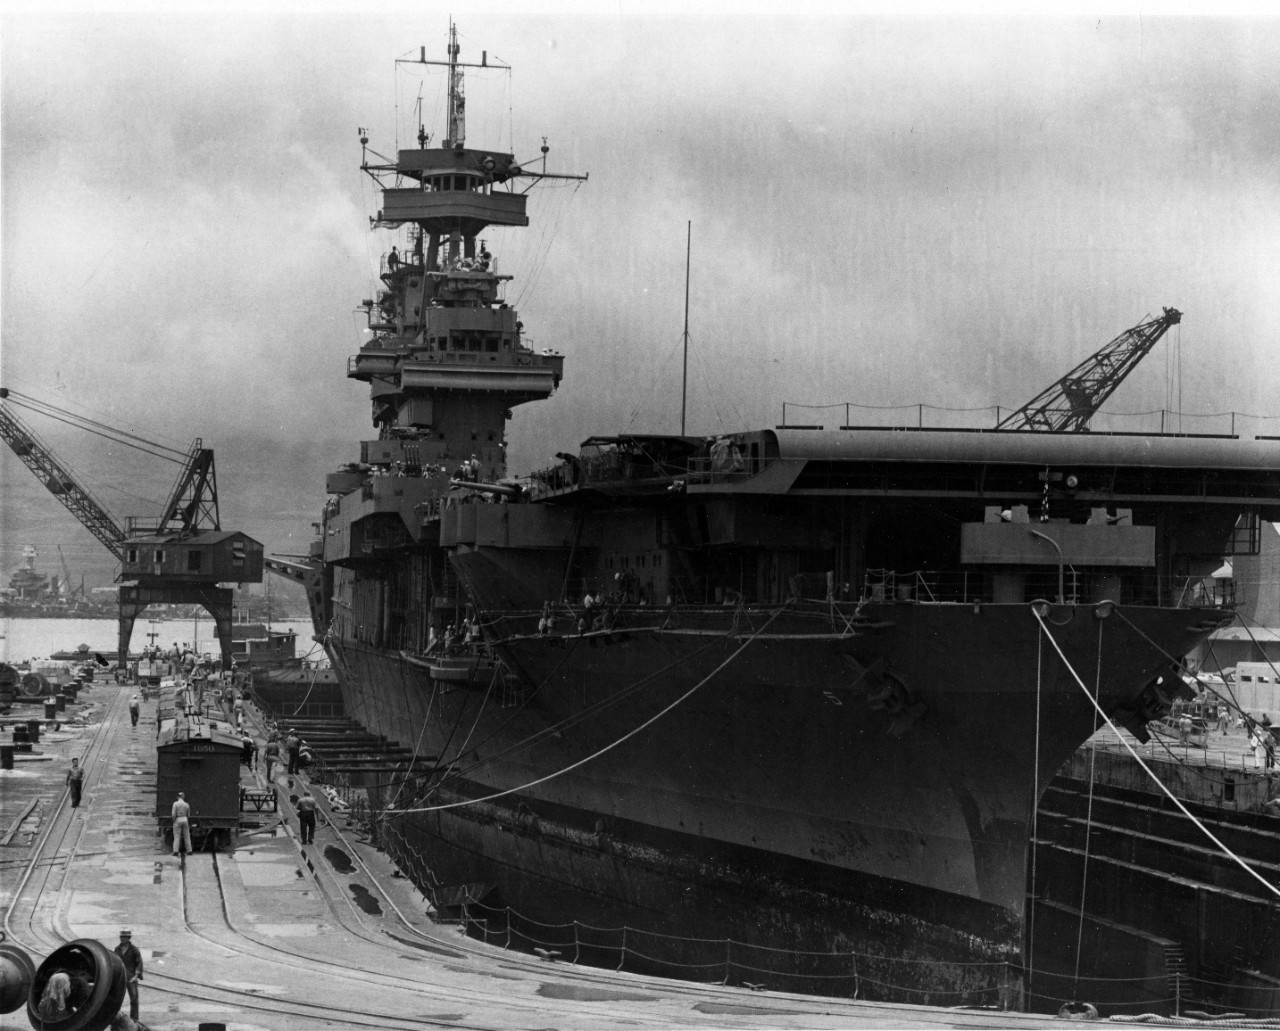 USS Yorktown (CV-5) received urgent repairs